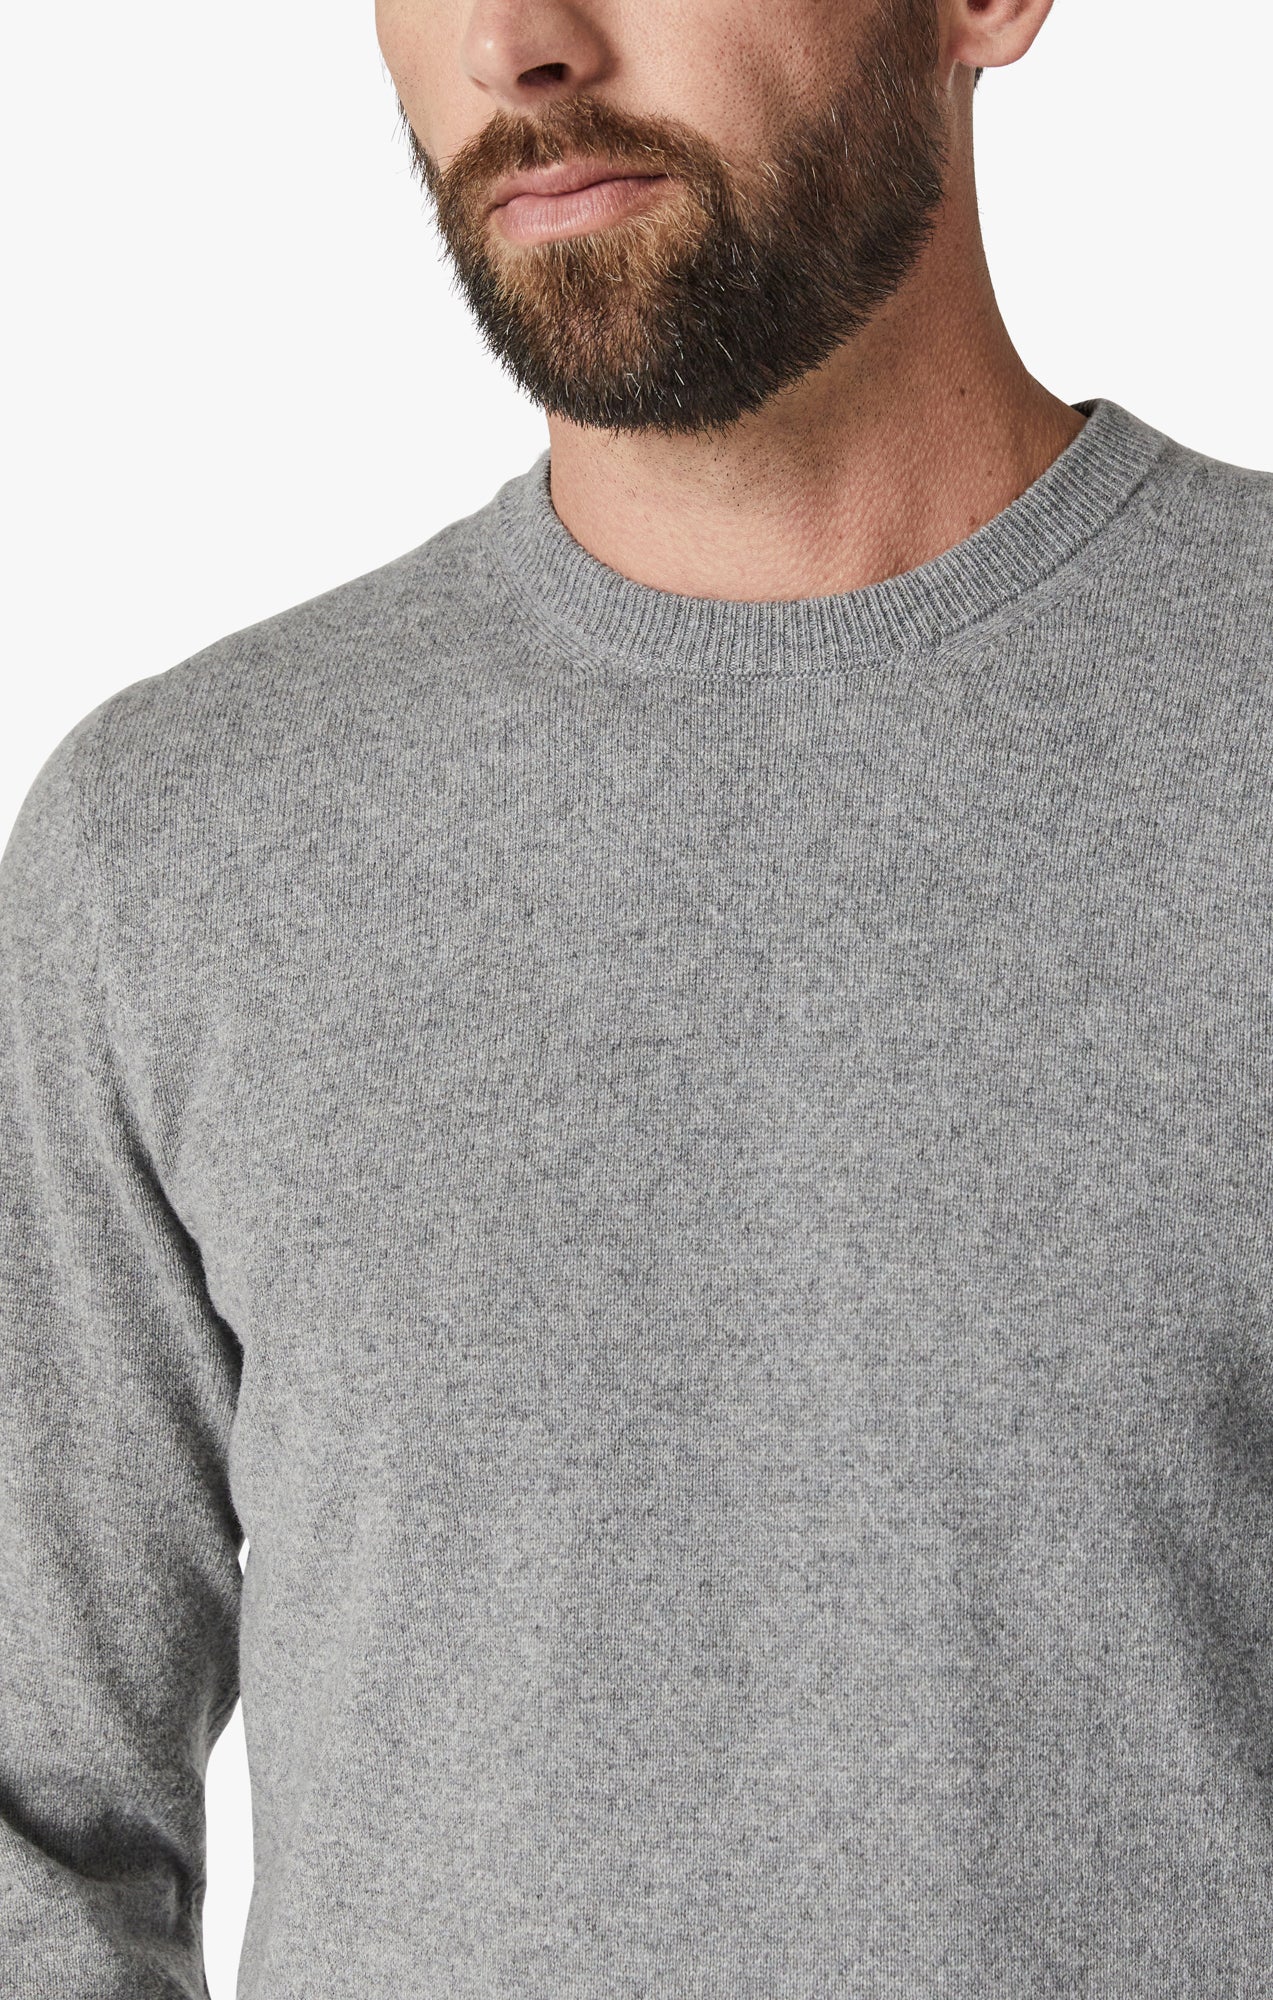 Cashmere Crew Neck Sweater In Grey Melange Image 5